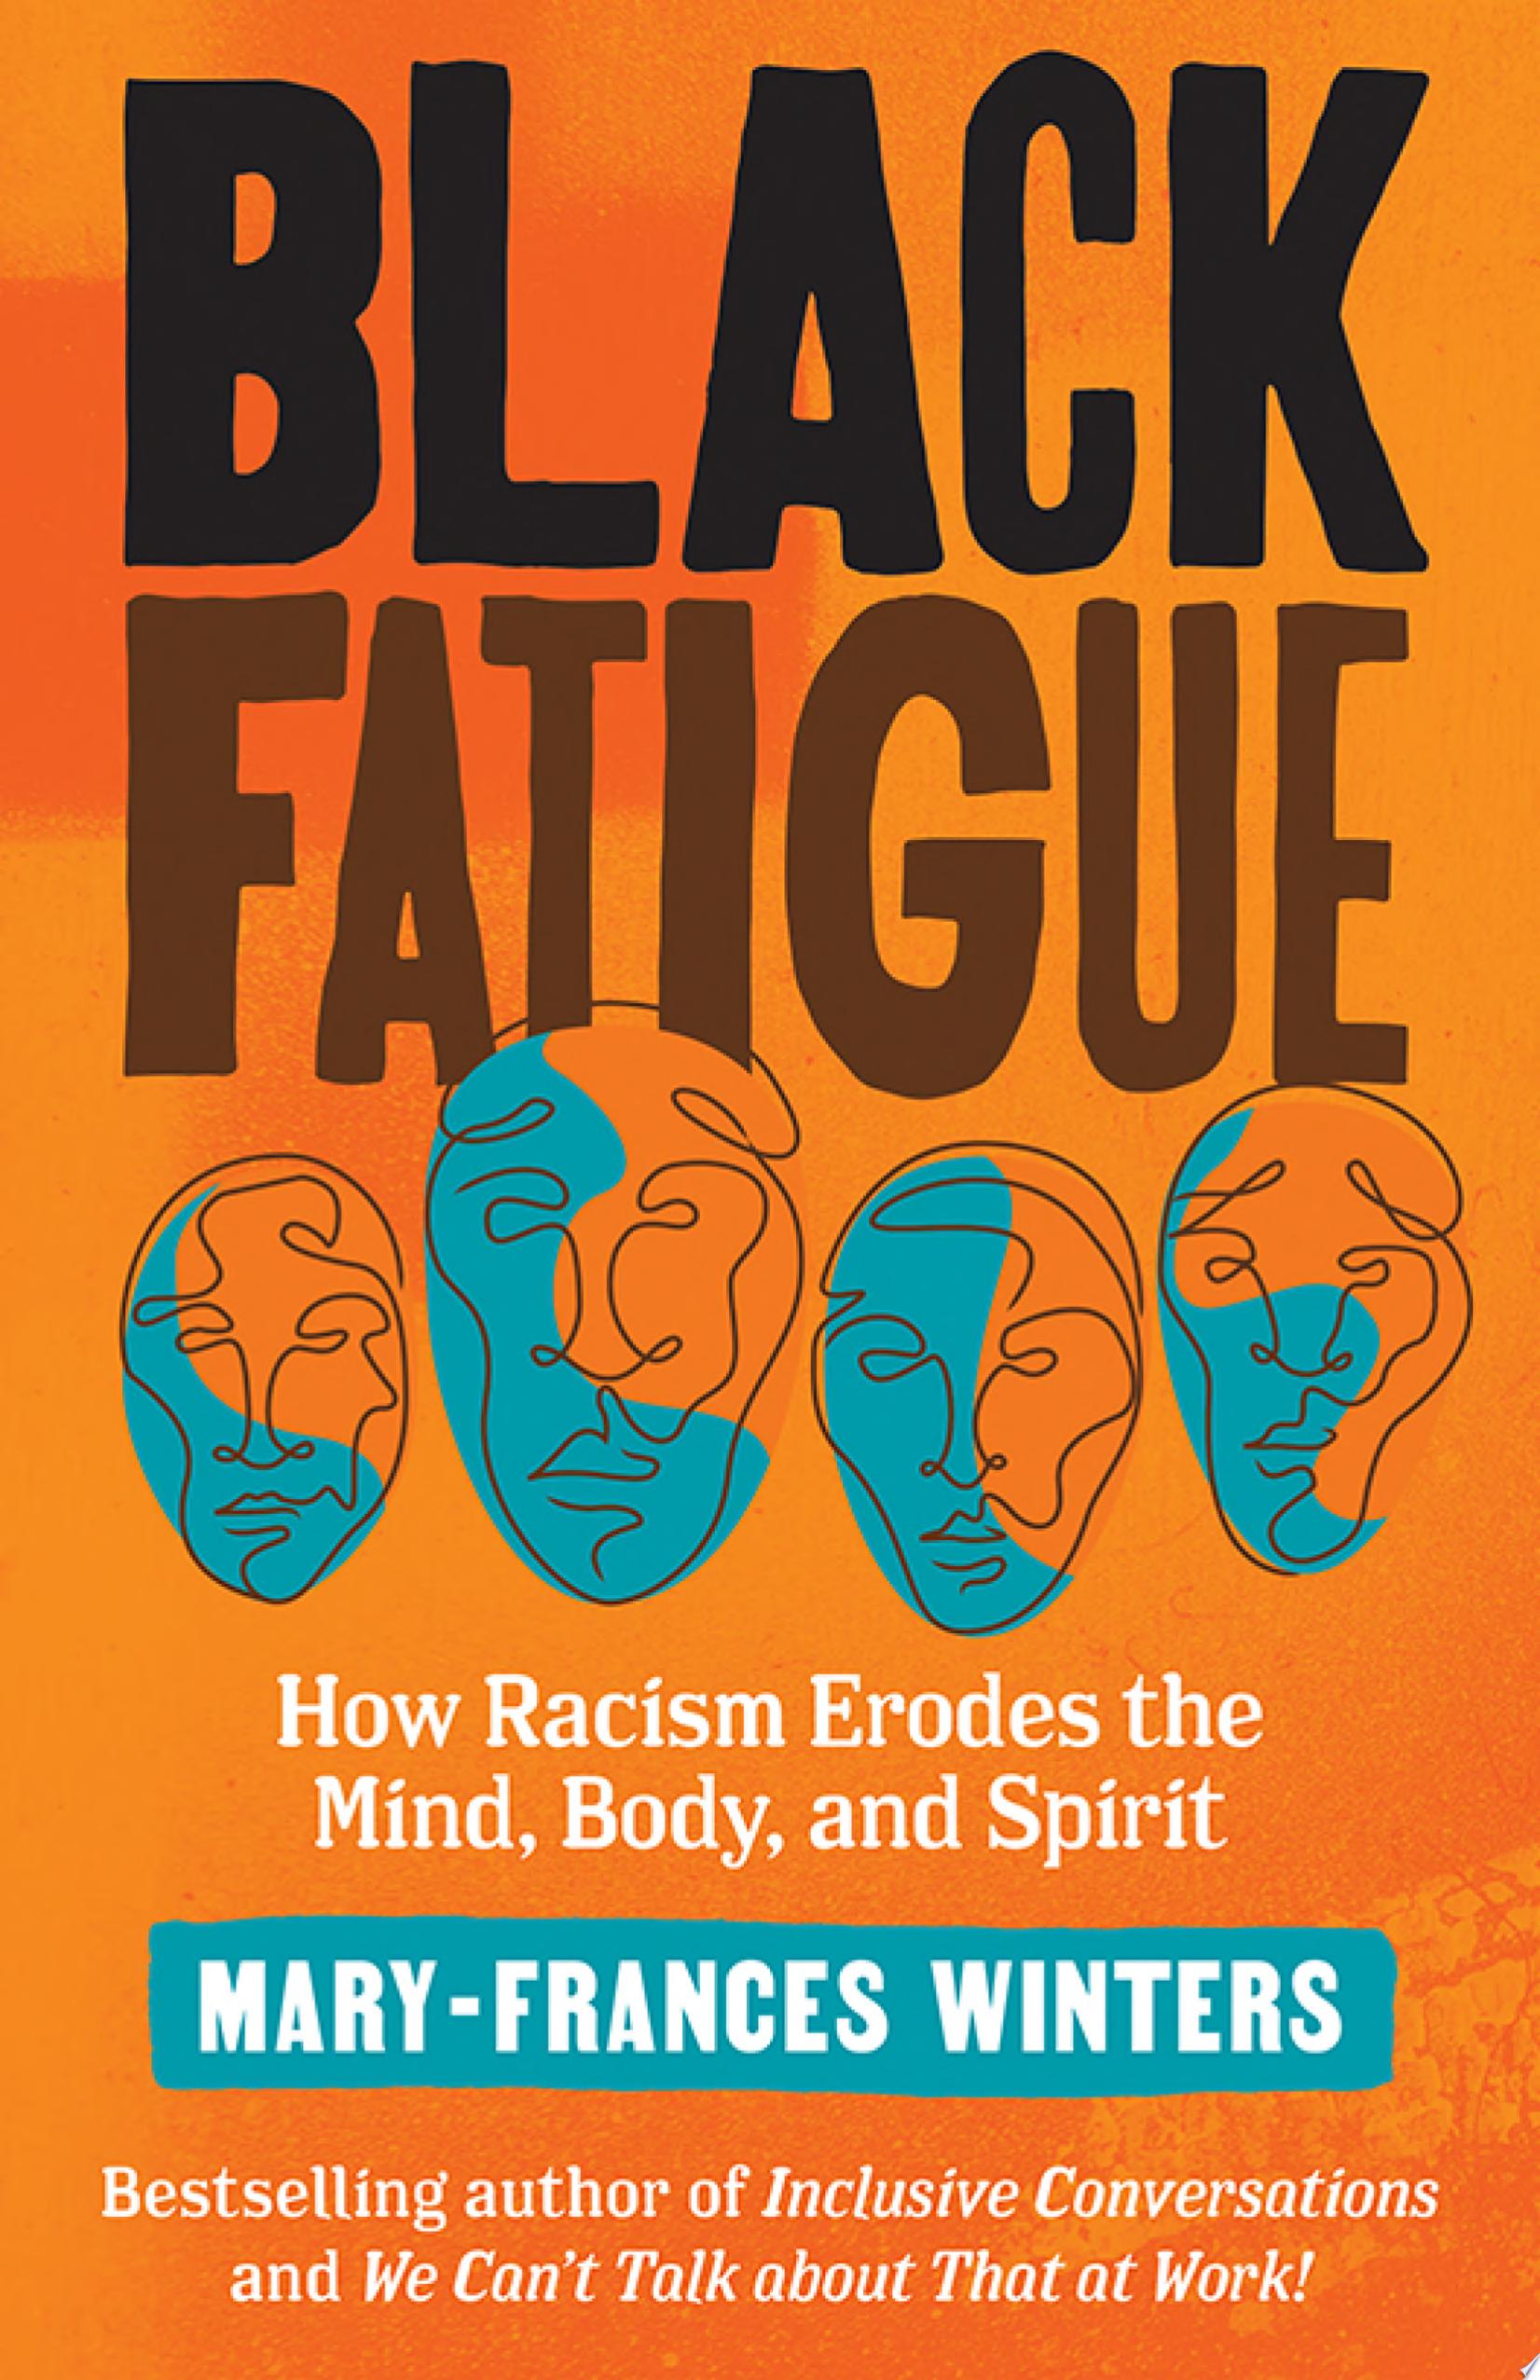 Image for "Black Fatigue"